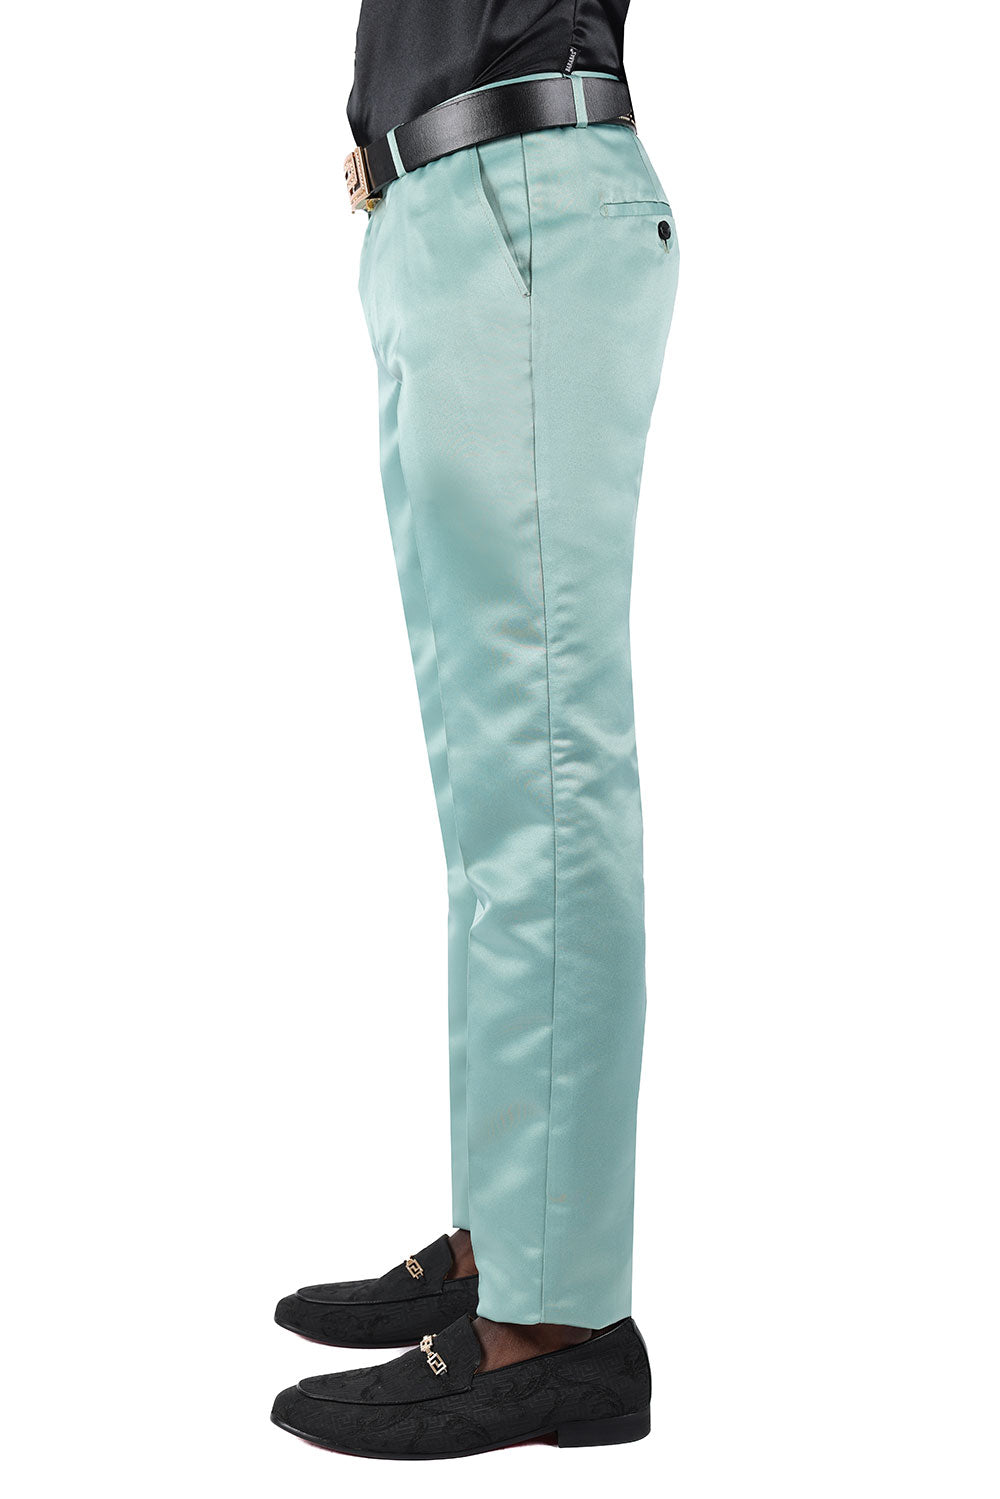 BARABAS Men's Solid Color Plain Shiny Chino Dress Pants 3CP02 mint